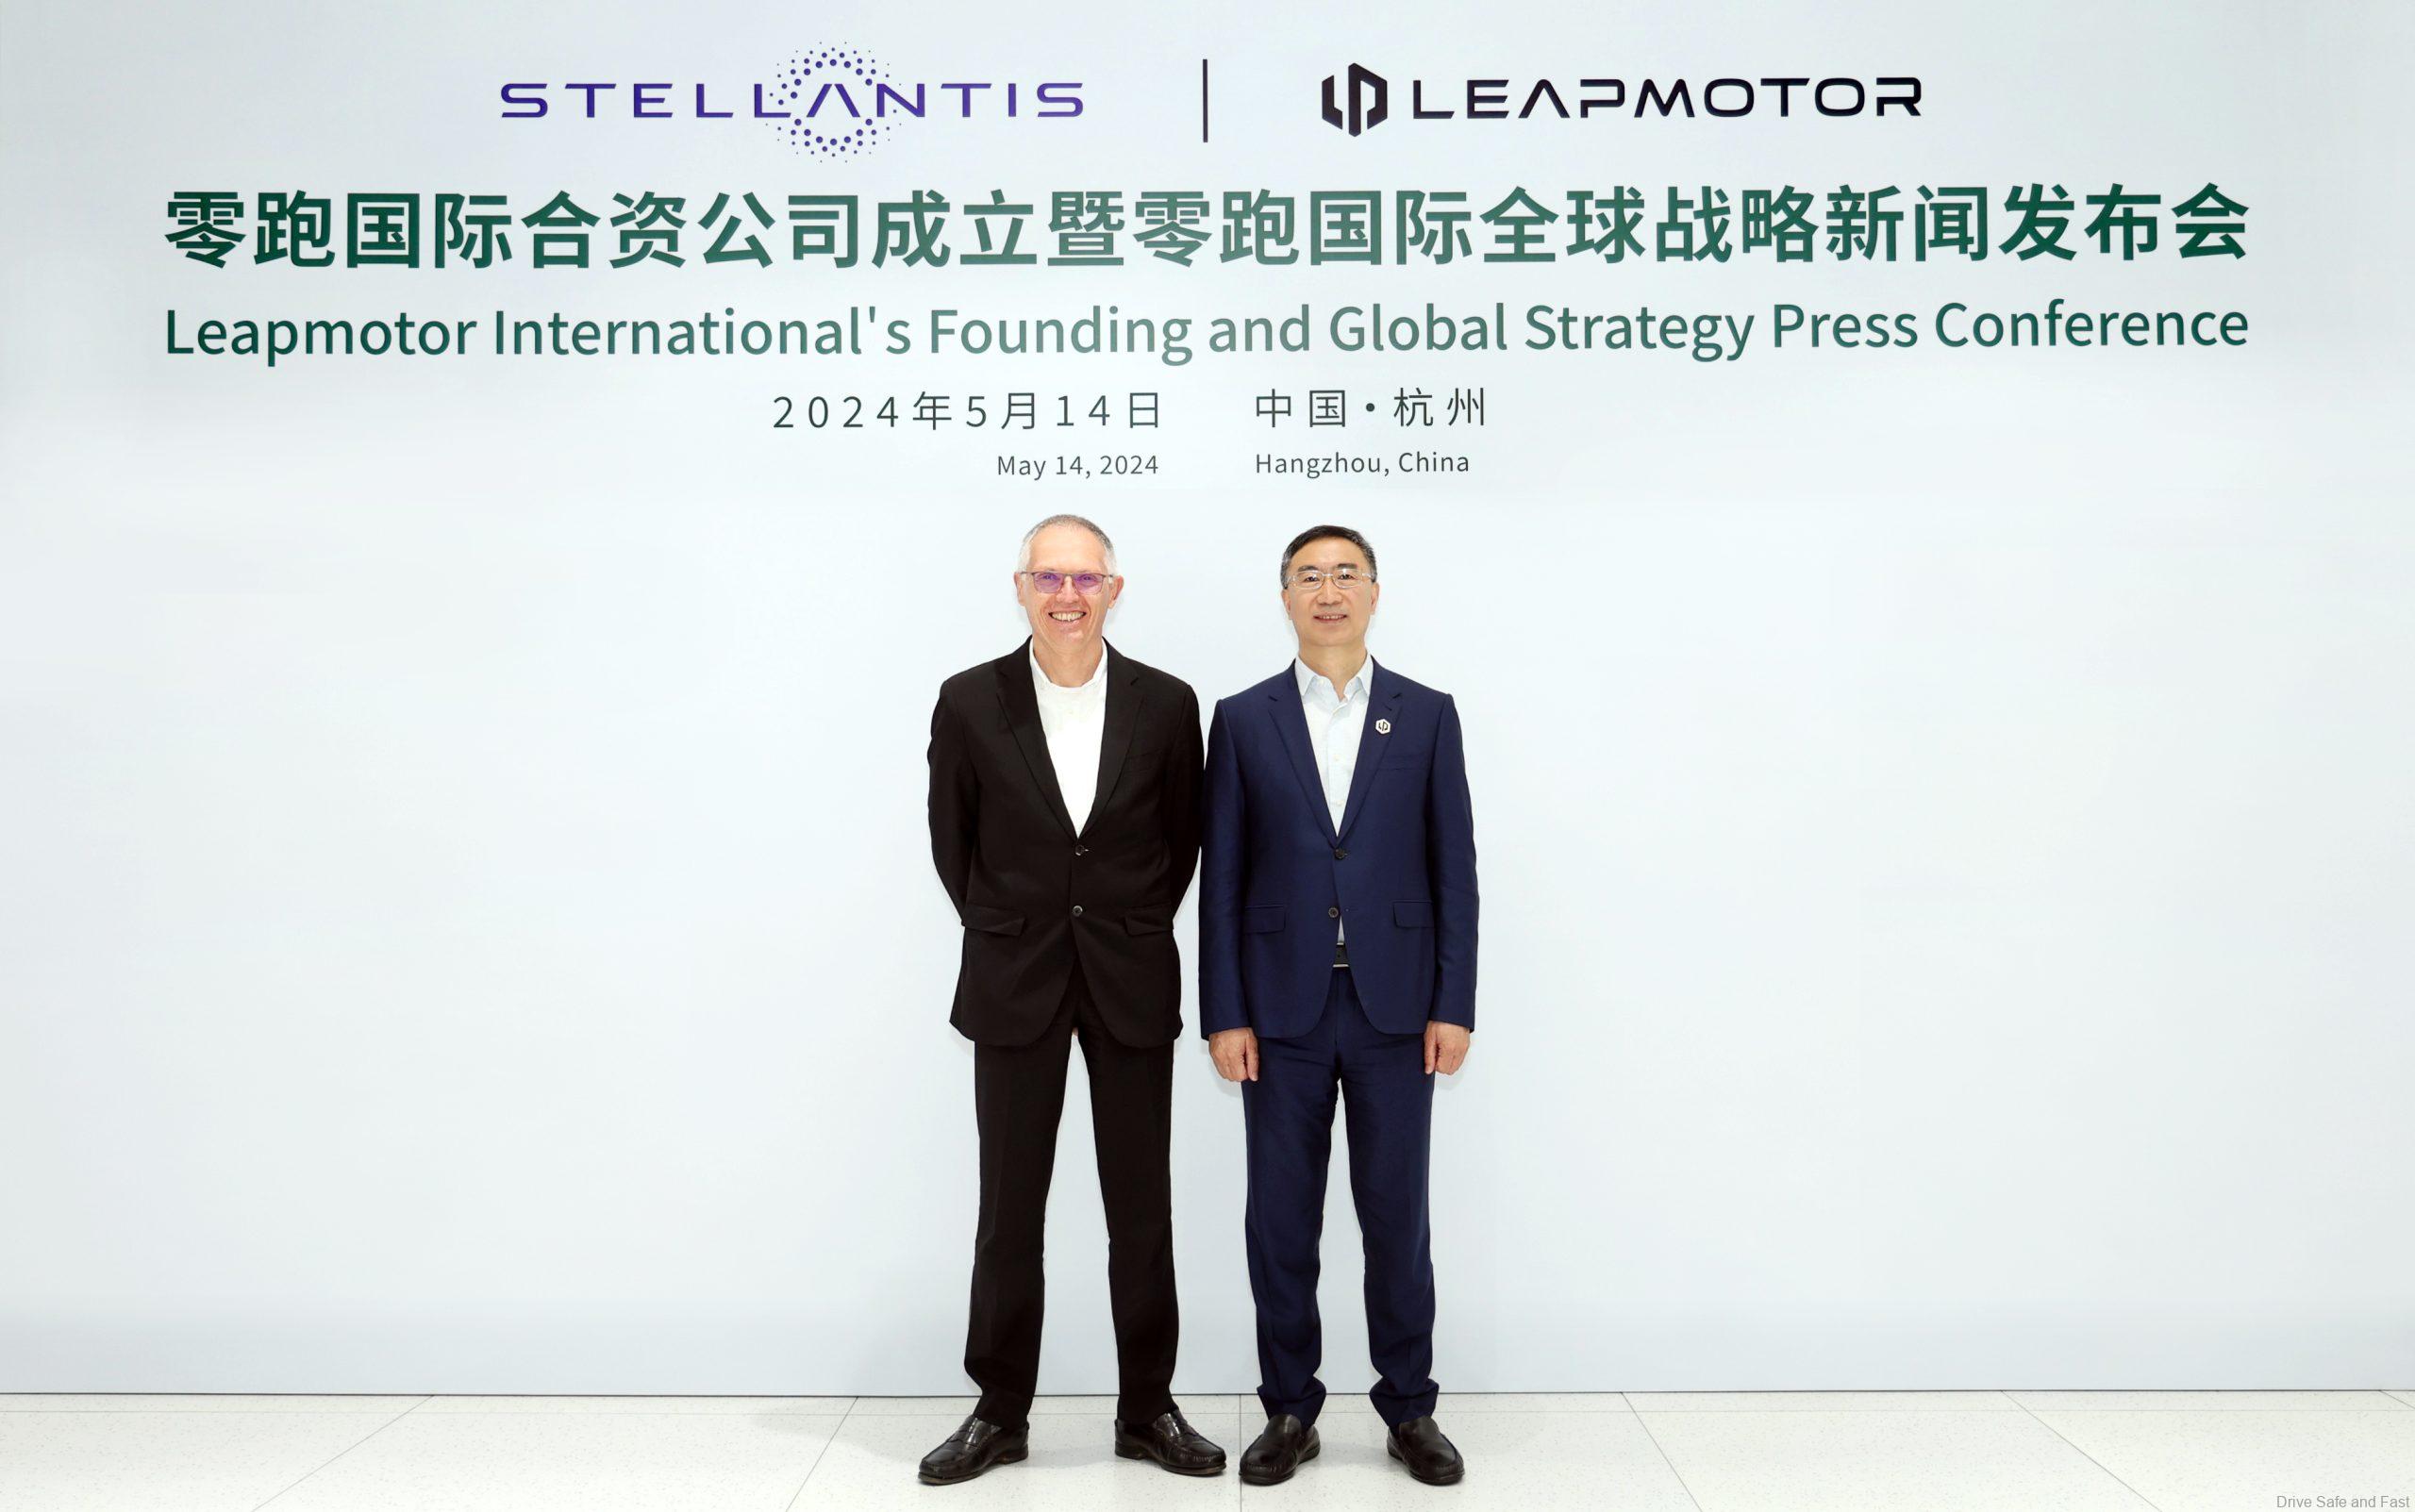 Stellantis & Leapmotor Partnership For Worldwide EV Push